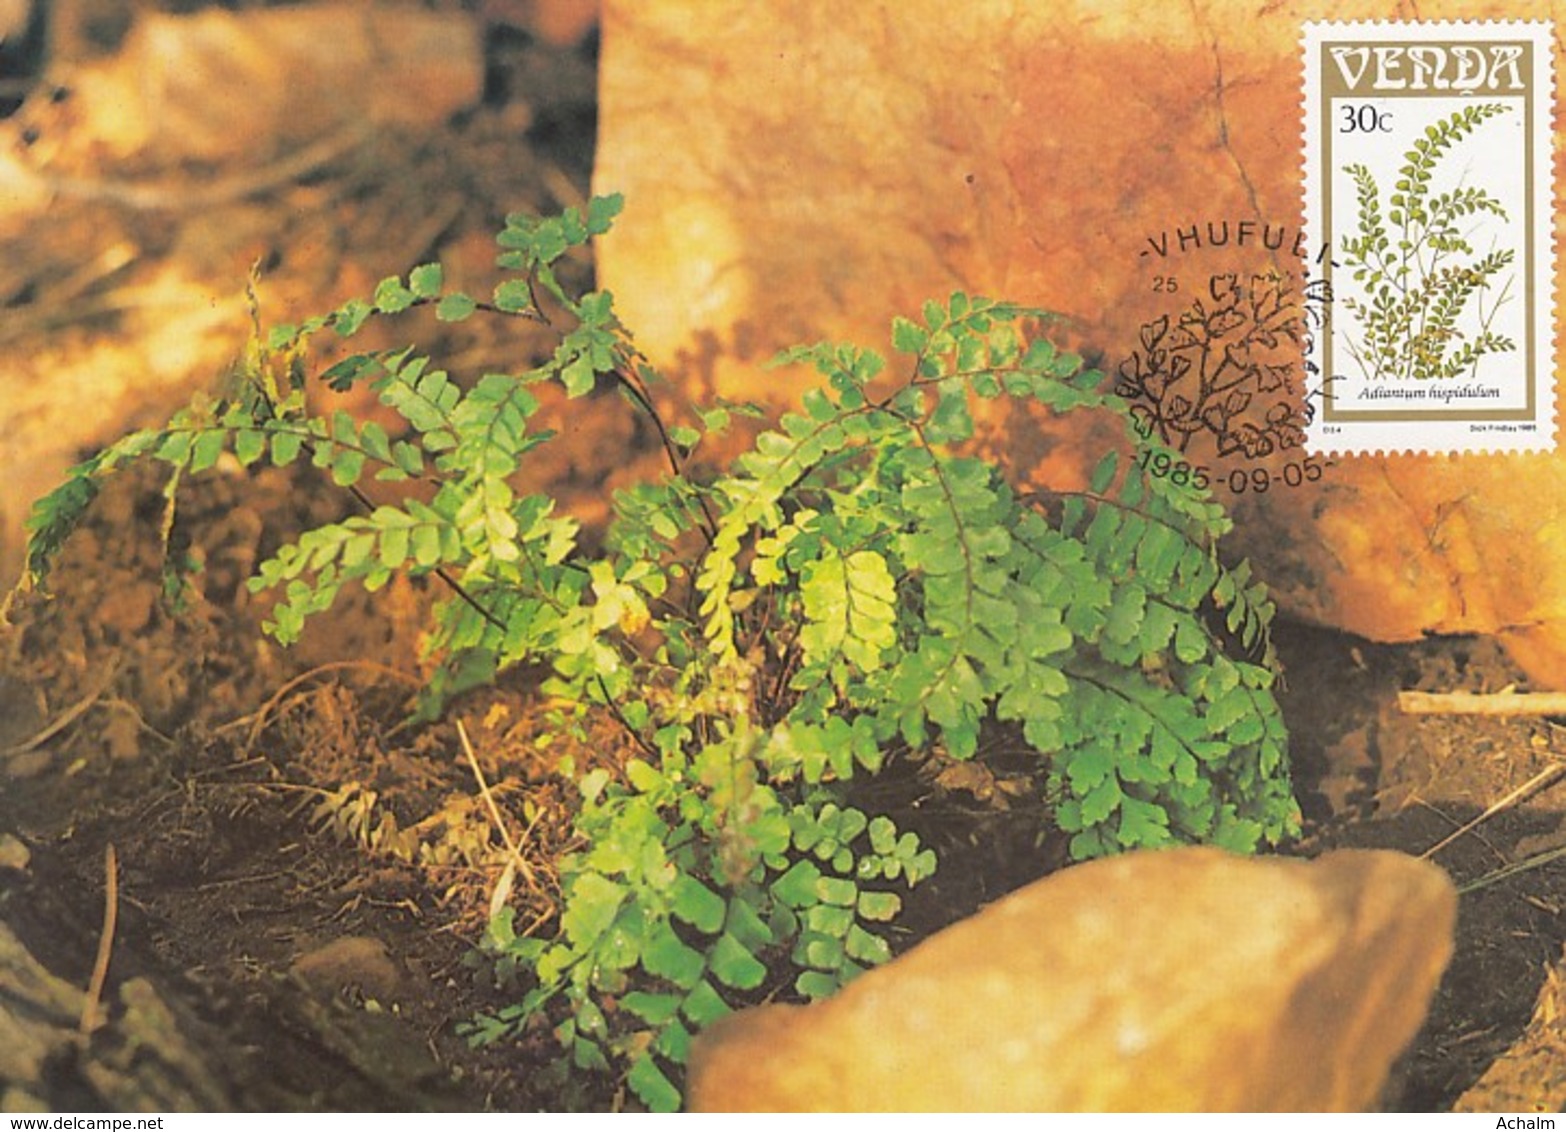 Venda - Maximum Card Of 1985 - MiNr. 118 - Fern Plants - Adiantum Hispidulum - Venda